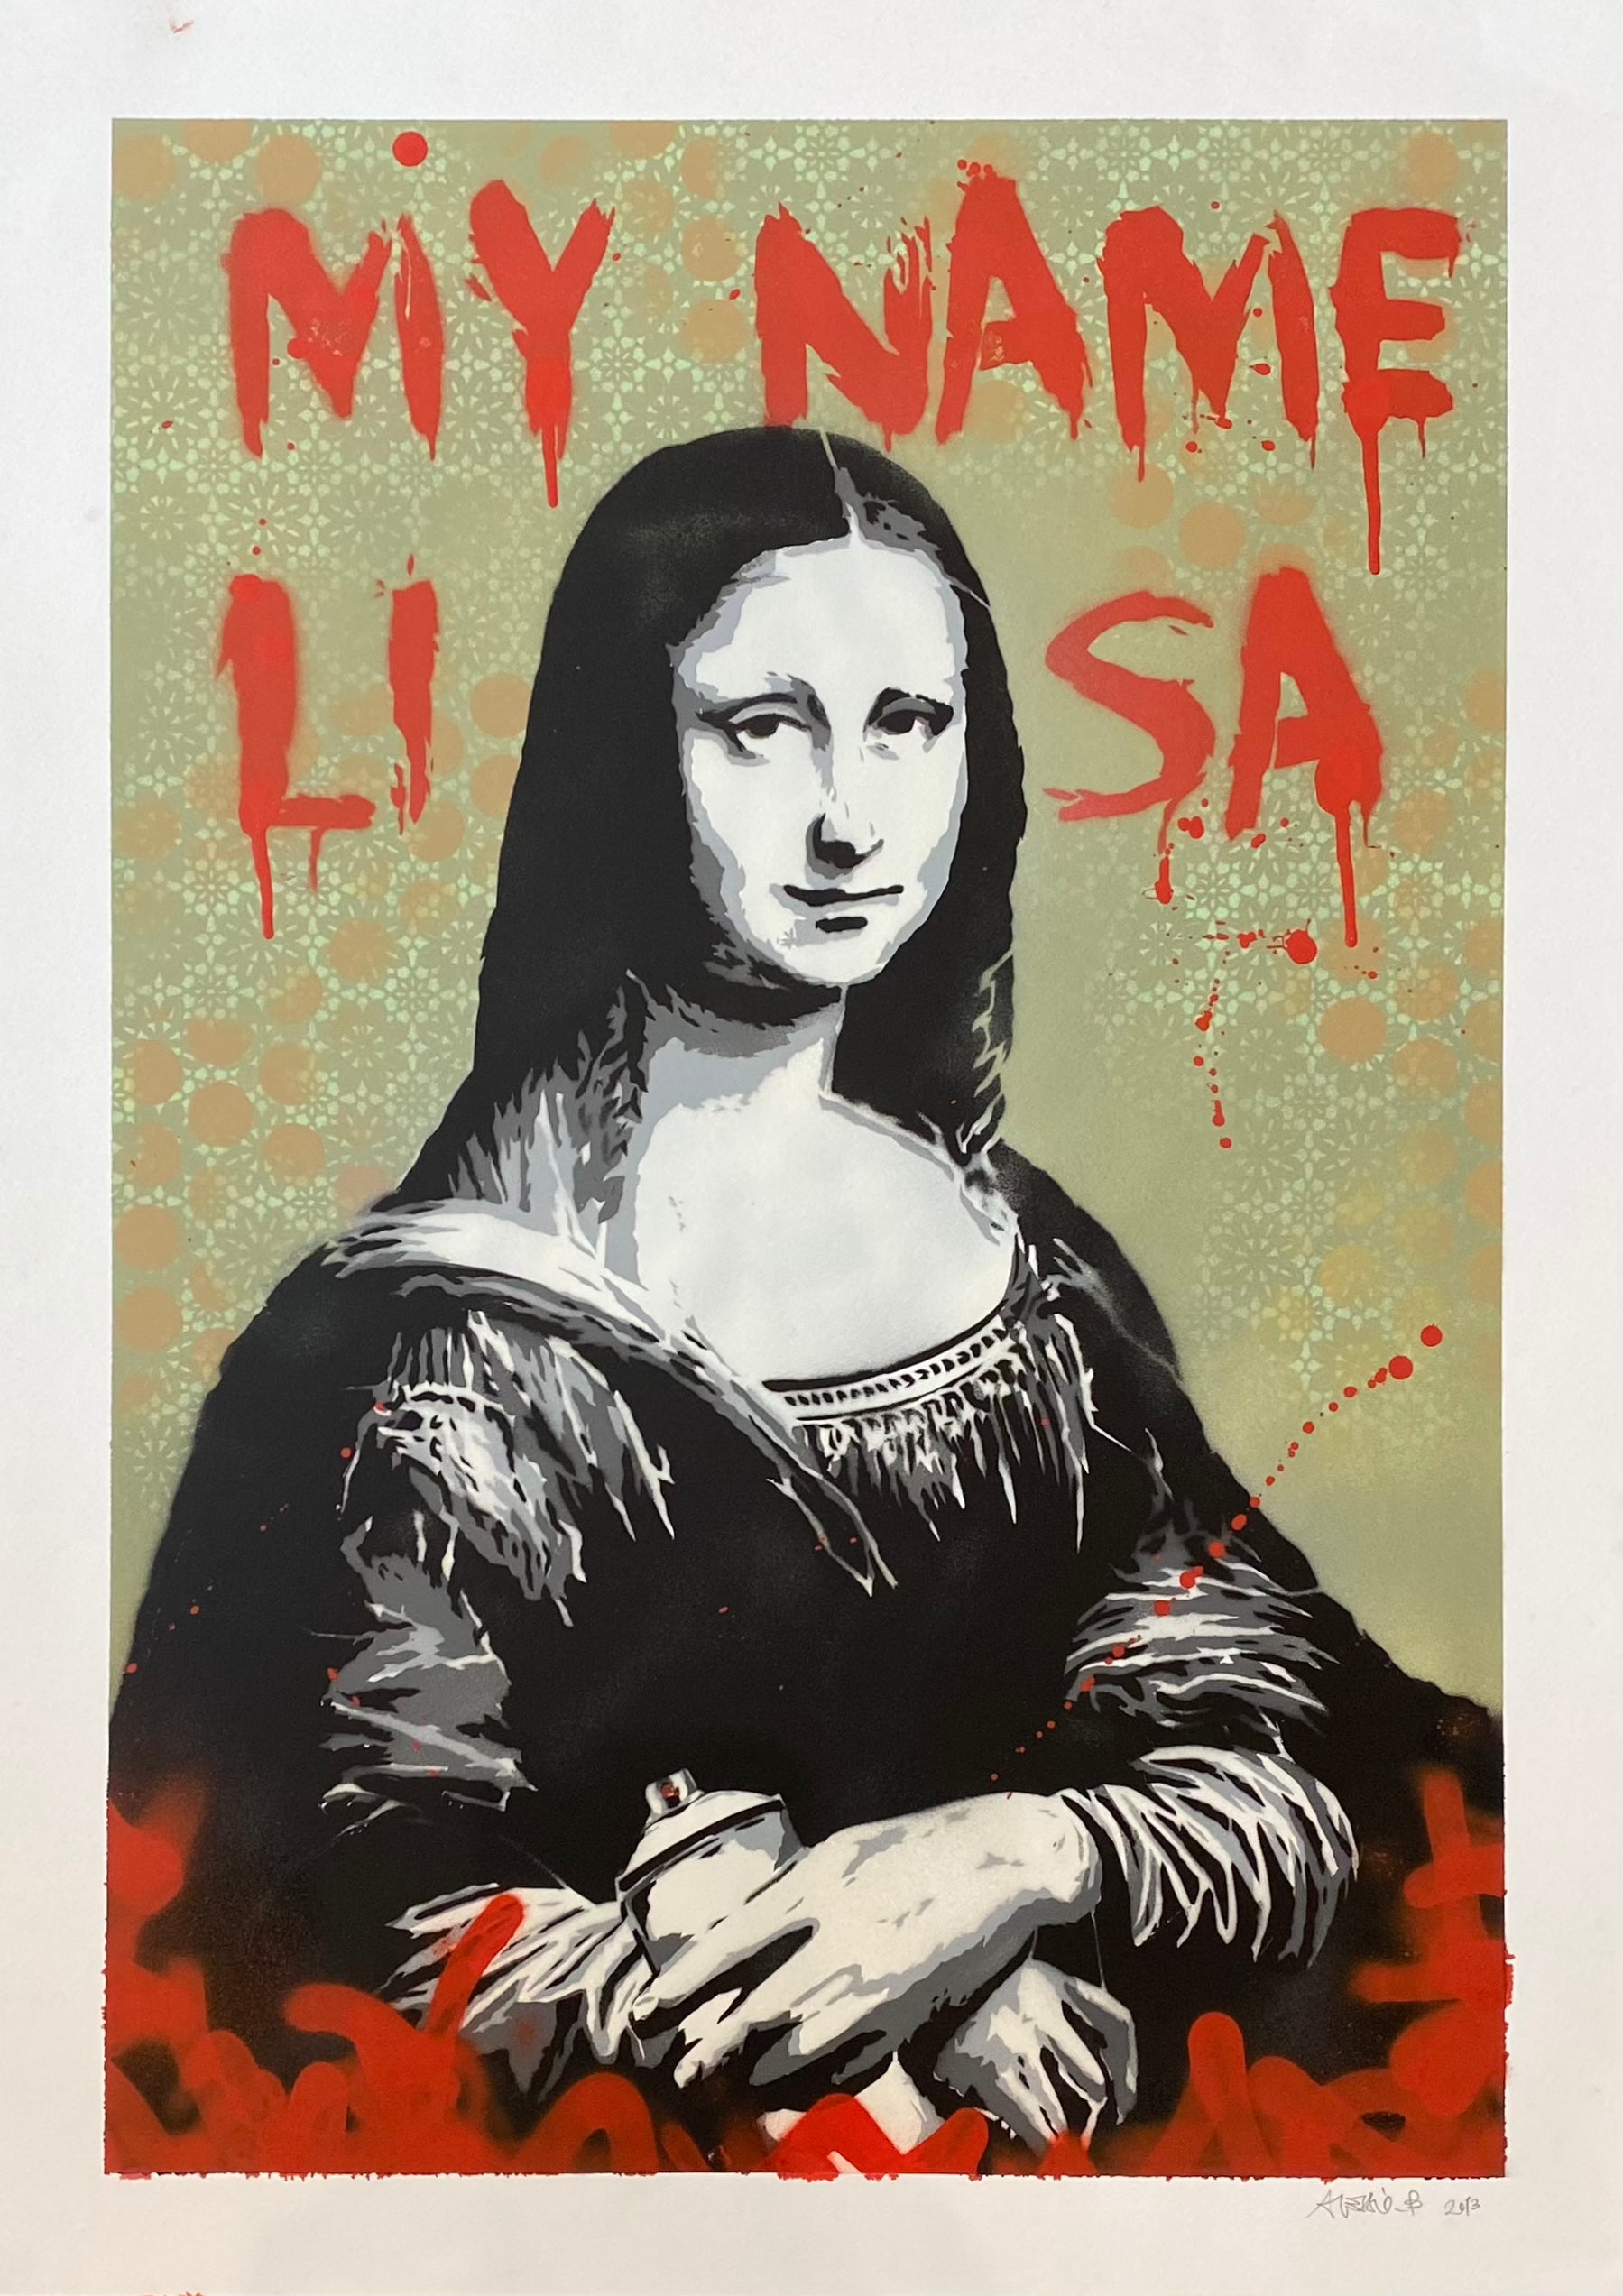 My Name Lisa di Alessio-B. Stampa giclée su carta 320 gsm edizione limitata 1/1 raffigurante l'iconica Monna Lisa di da Vinci rivisitata | Cd Studio d'Arte